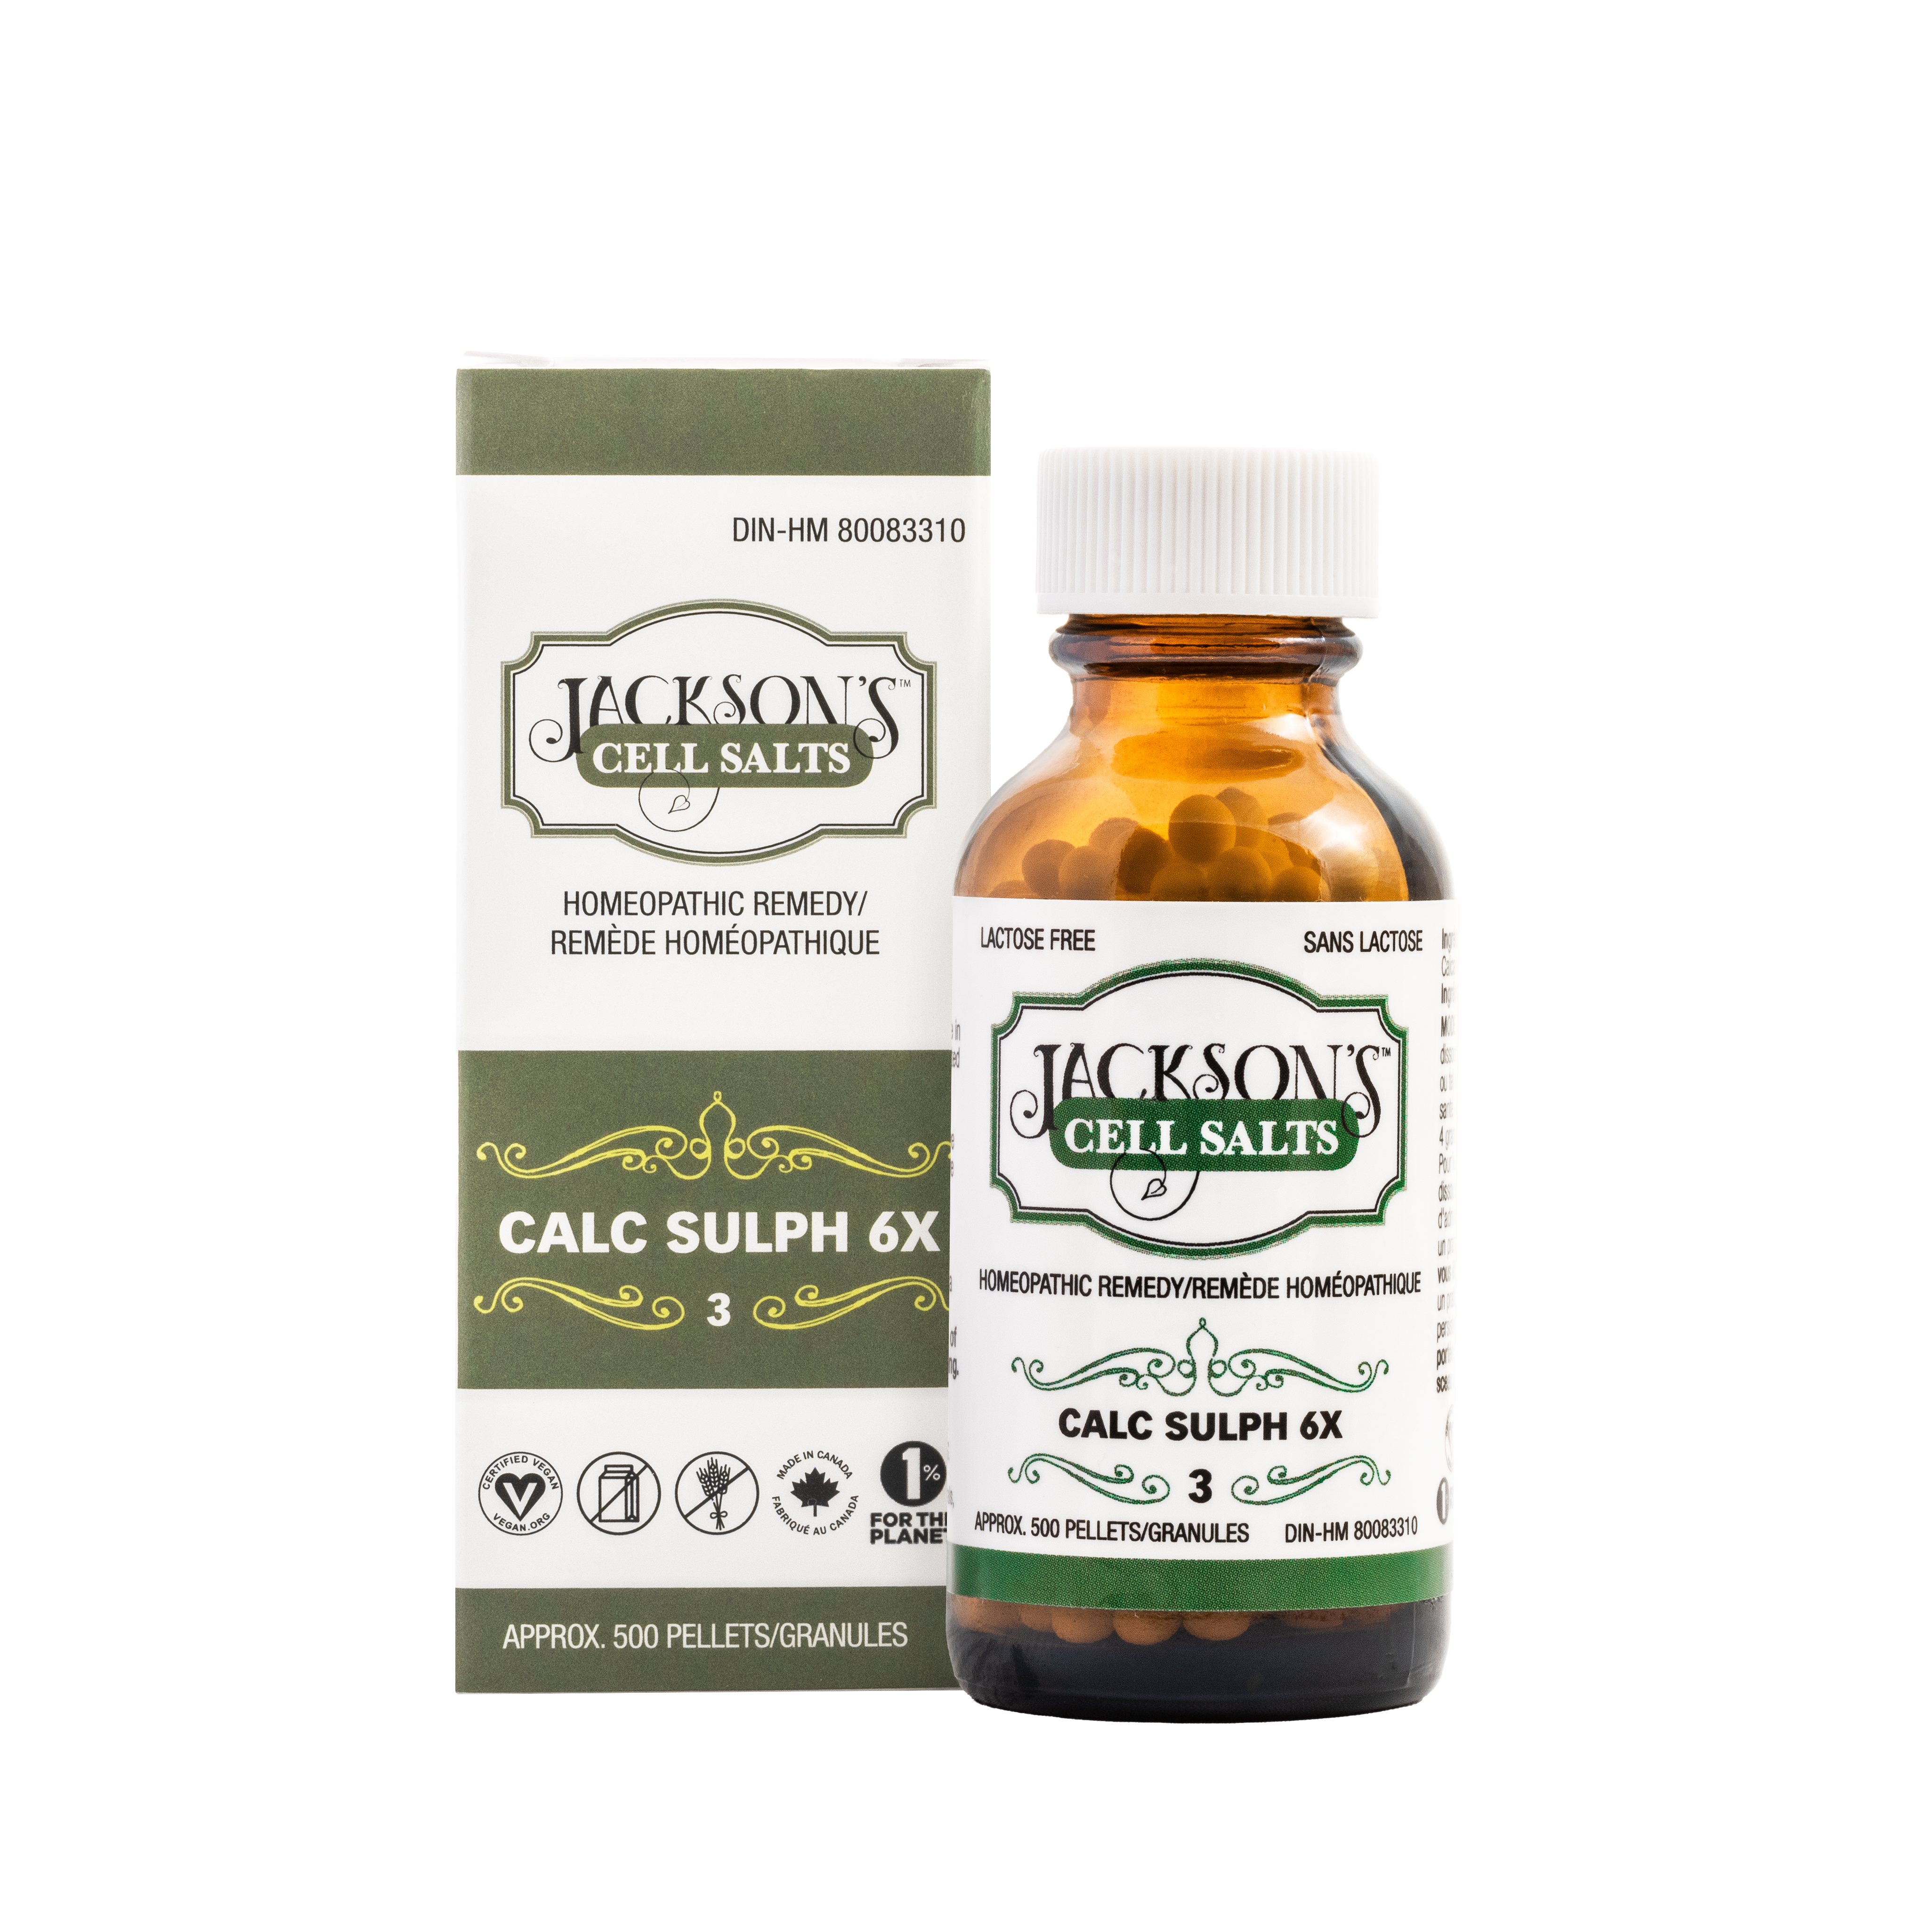 #3 Calc sulph 6X (Calcium sulfate) - Certified Vegan, Lactose-Free Schuessler Cell (Tissue) Salt